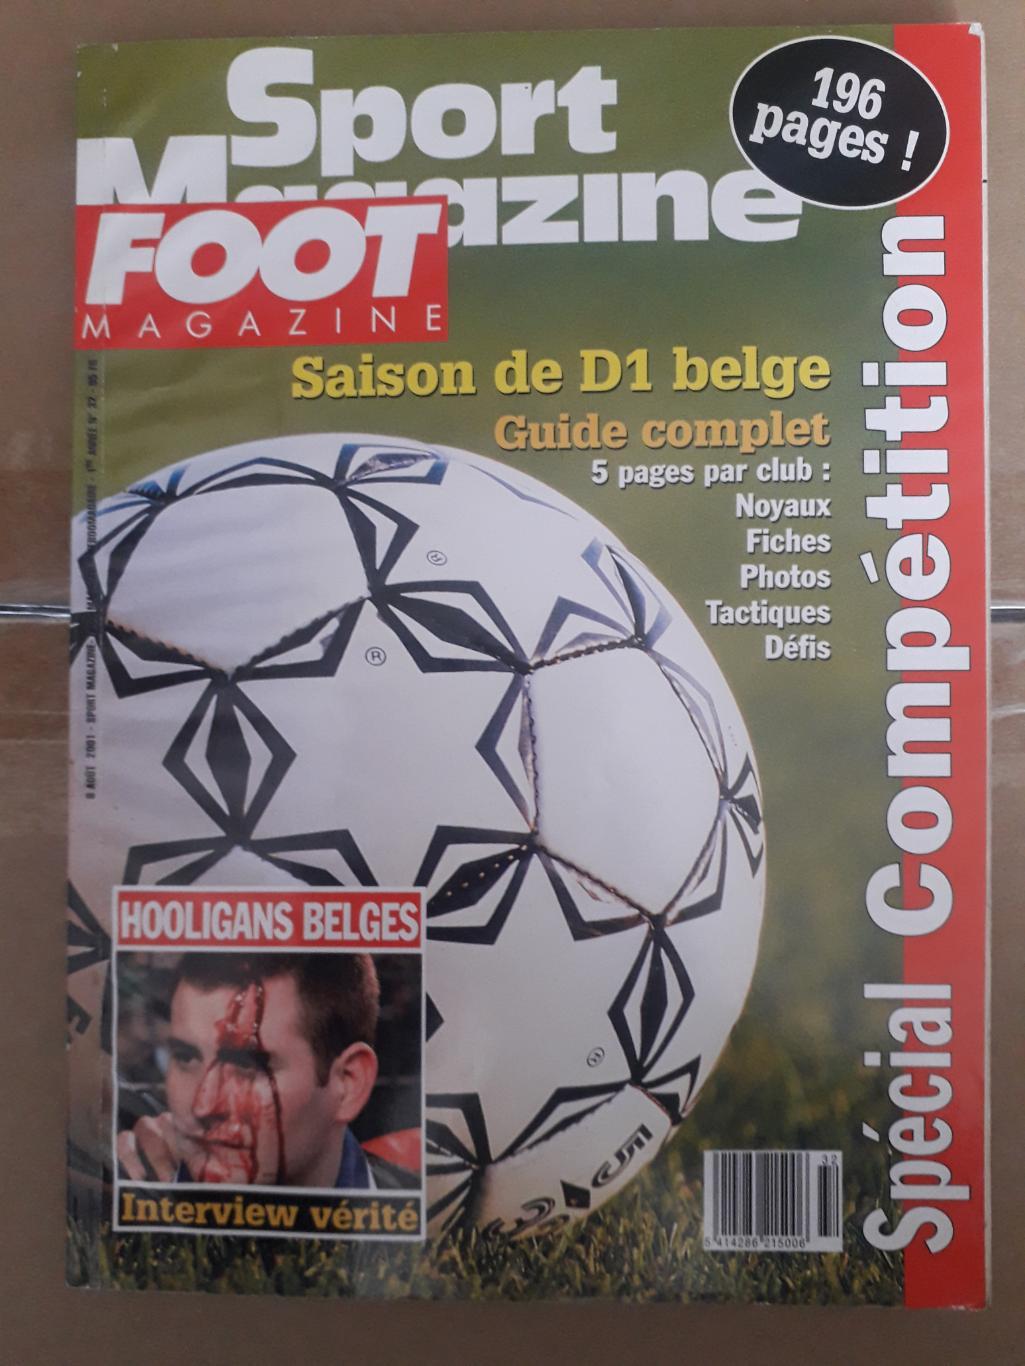 Foot magazine 2001/02